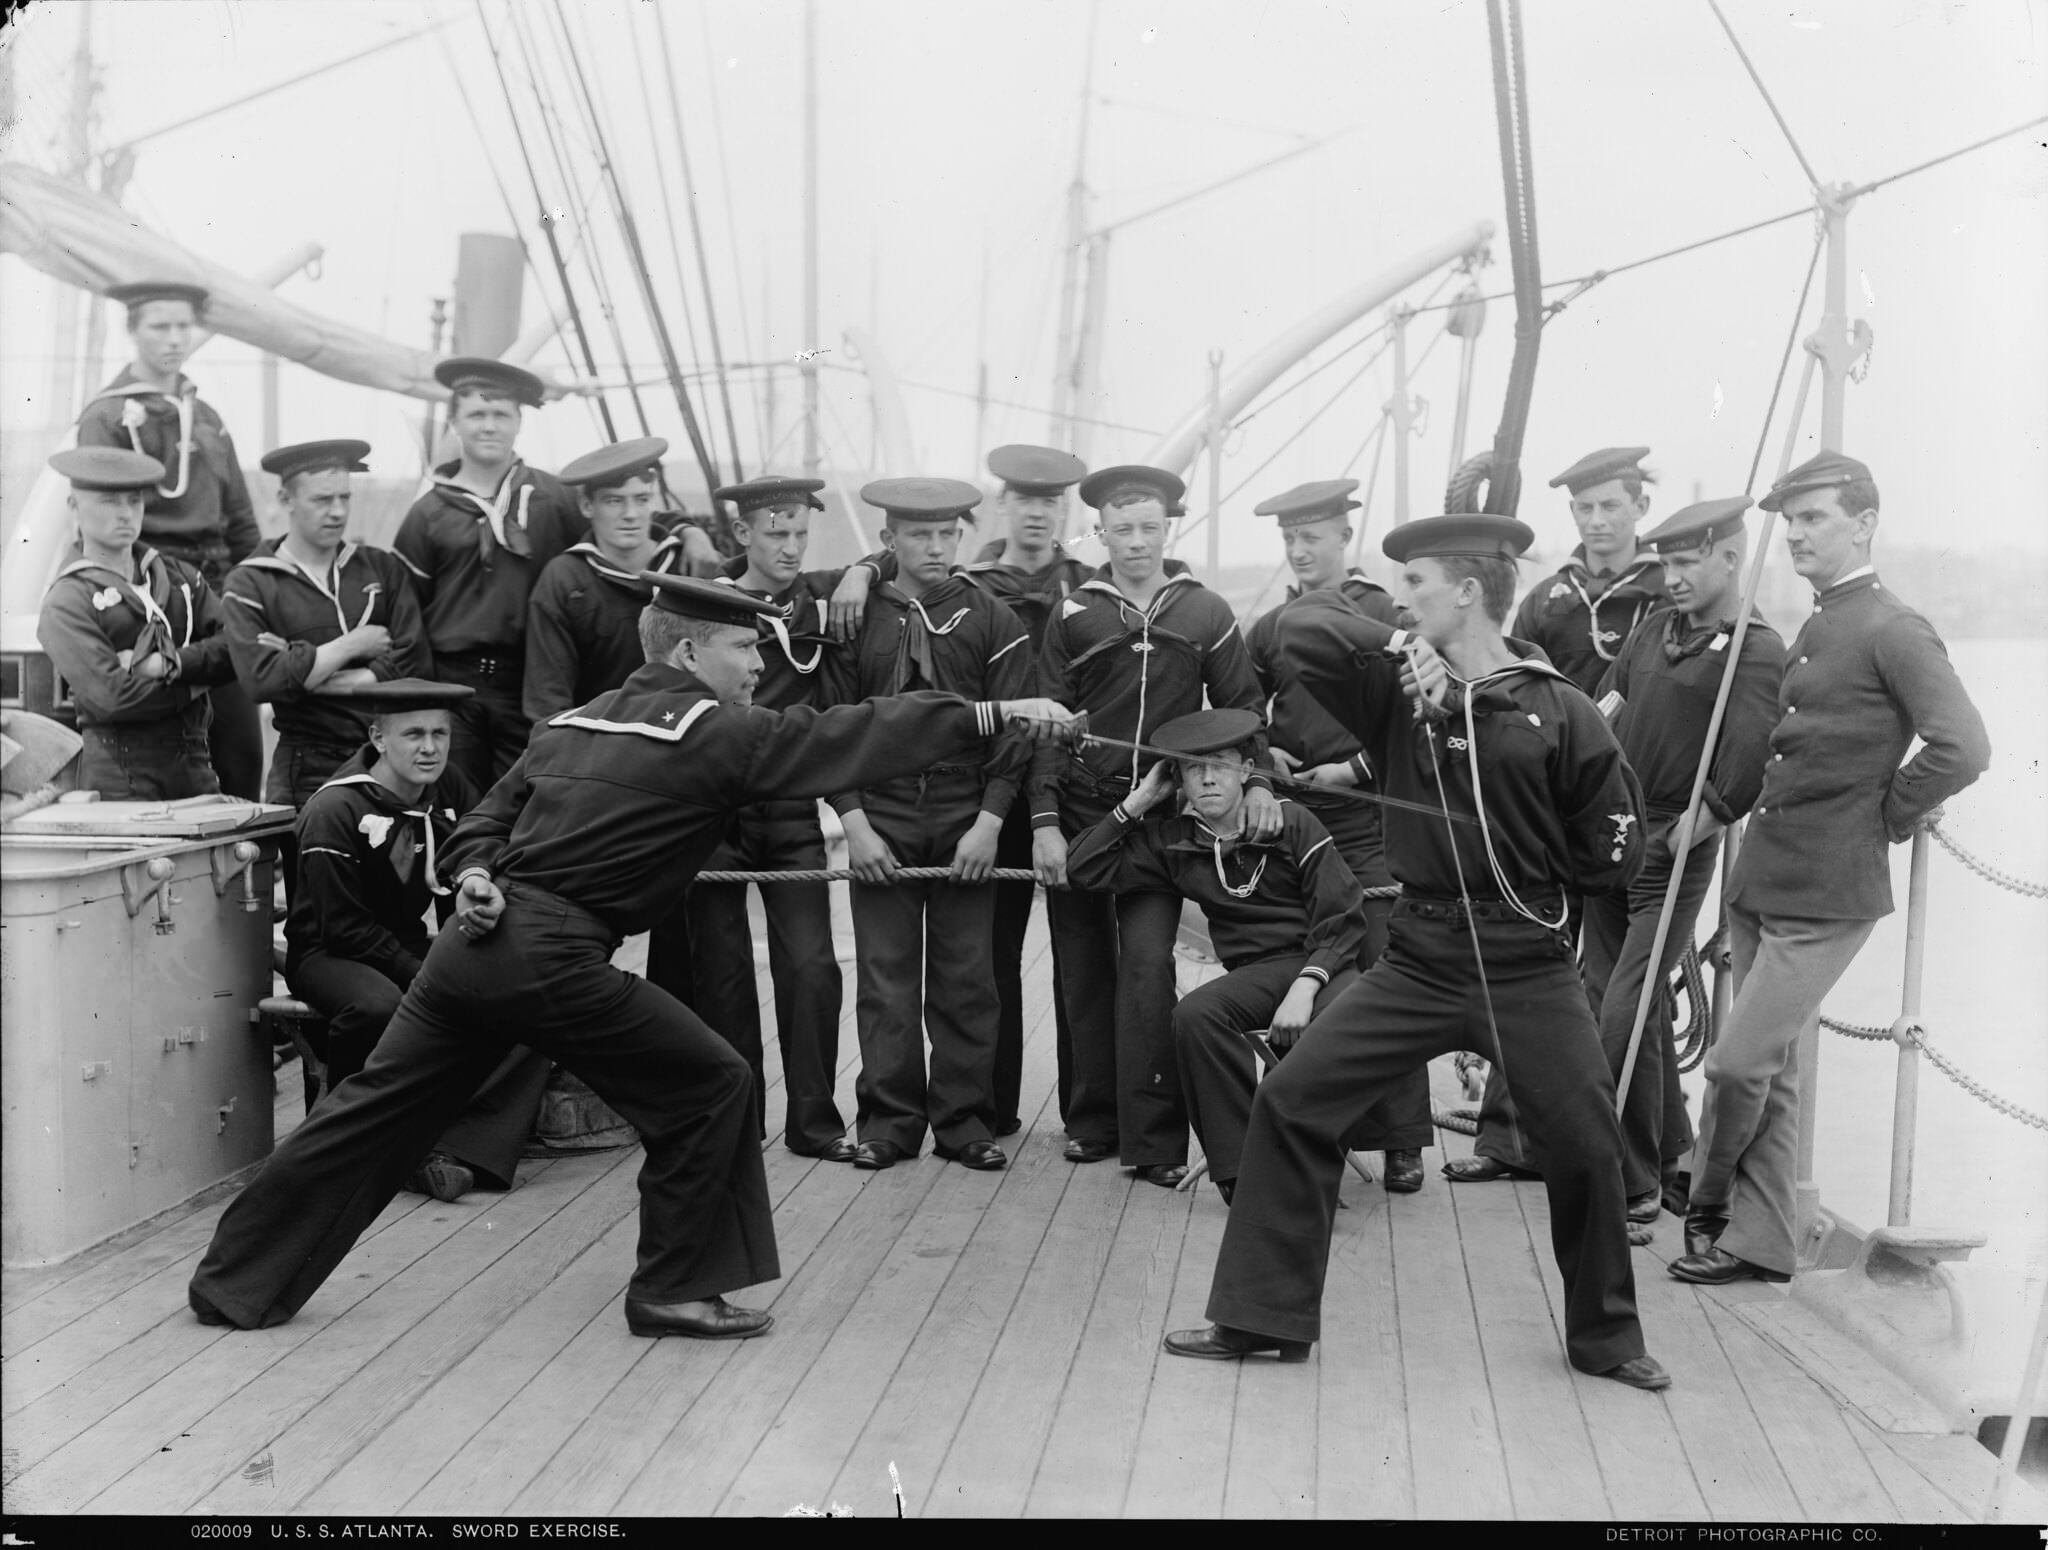 Sword exercise aboard the USS Atlanta, 1901